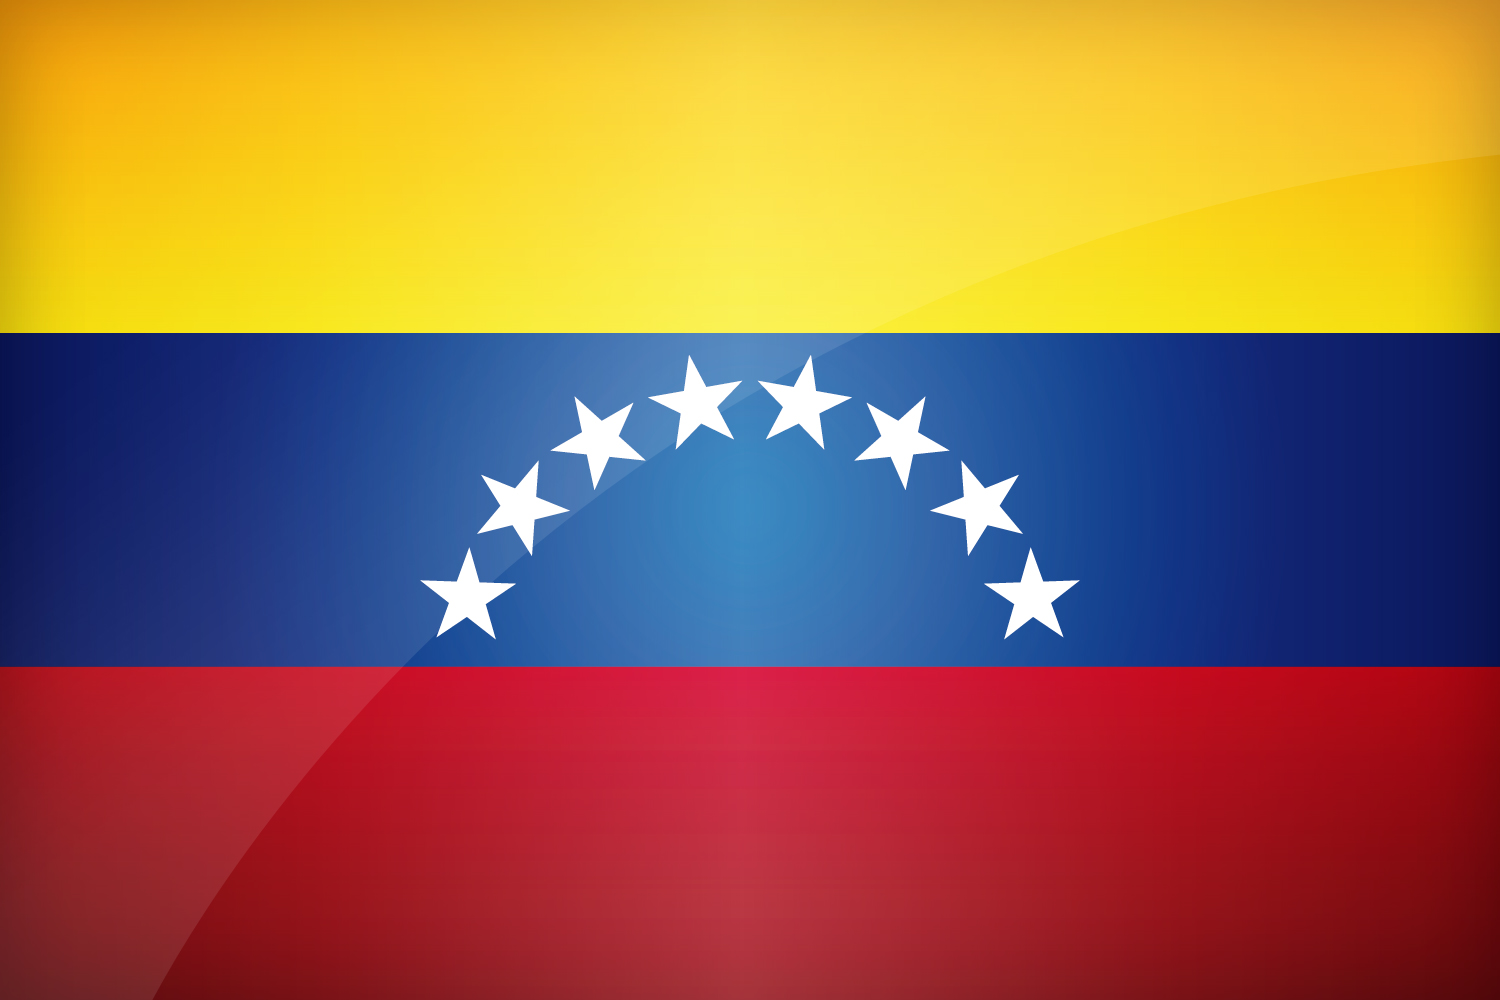 Flag Of Venezuela Find The Best Design For Venezuelan